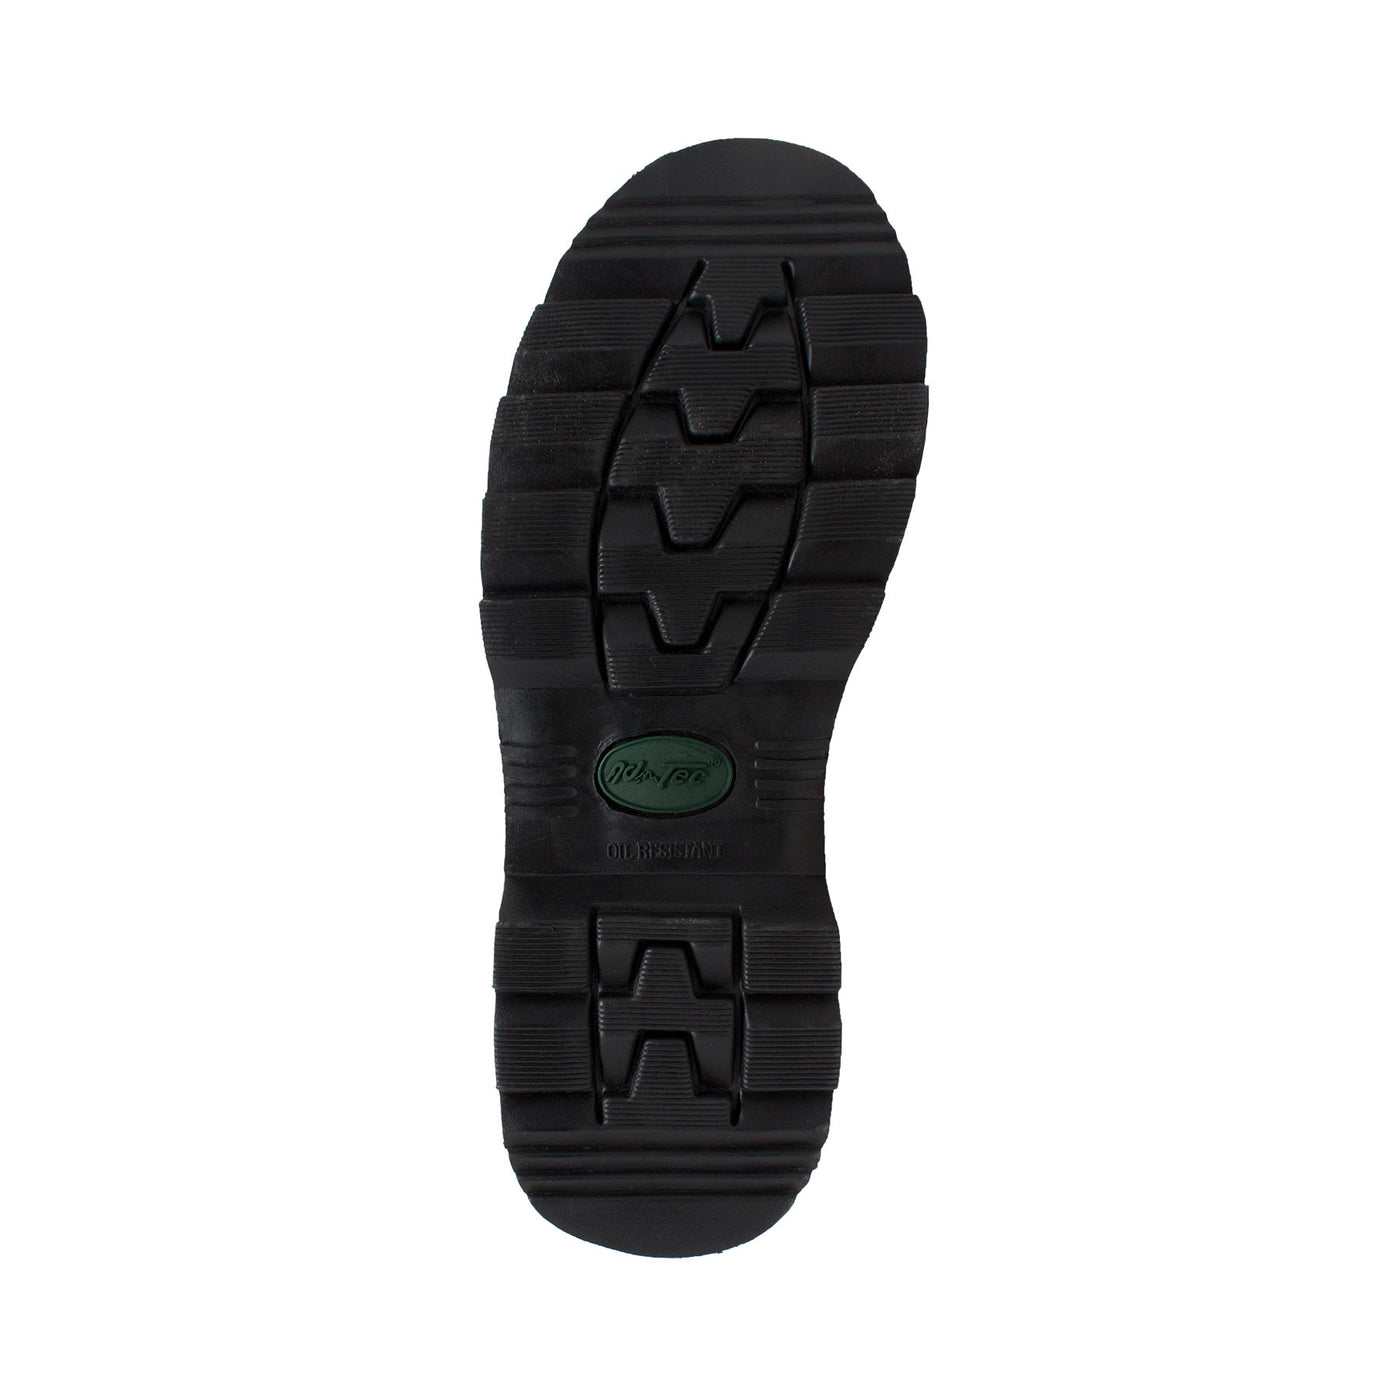 Men's 6" Black Composite Toe Boot -1587 - Shop Genuine Leather men & women's boots online | AdTecFootWear